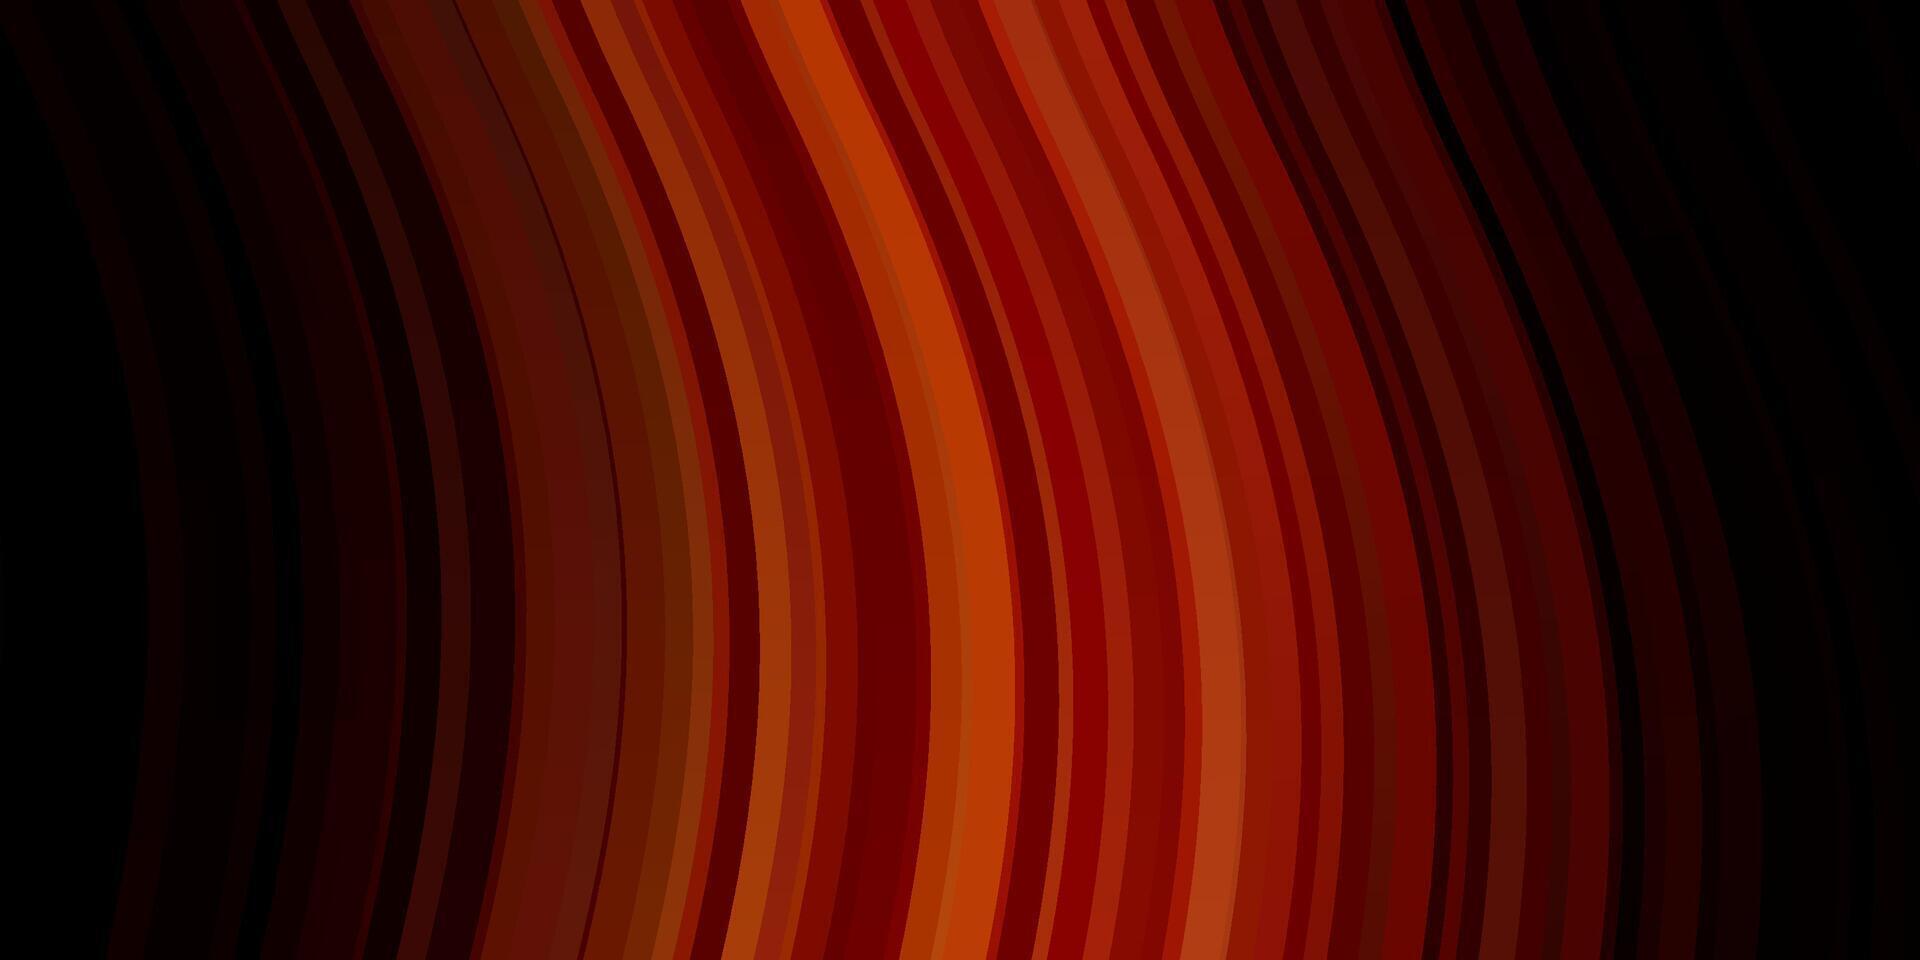 patrón de vector rojo oscuro con líneas torcidas.